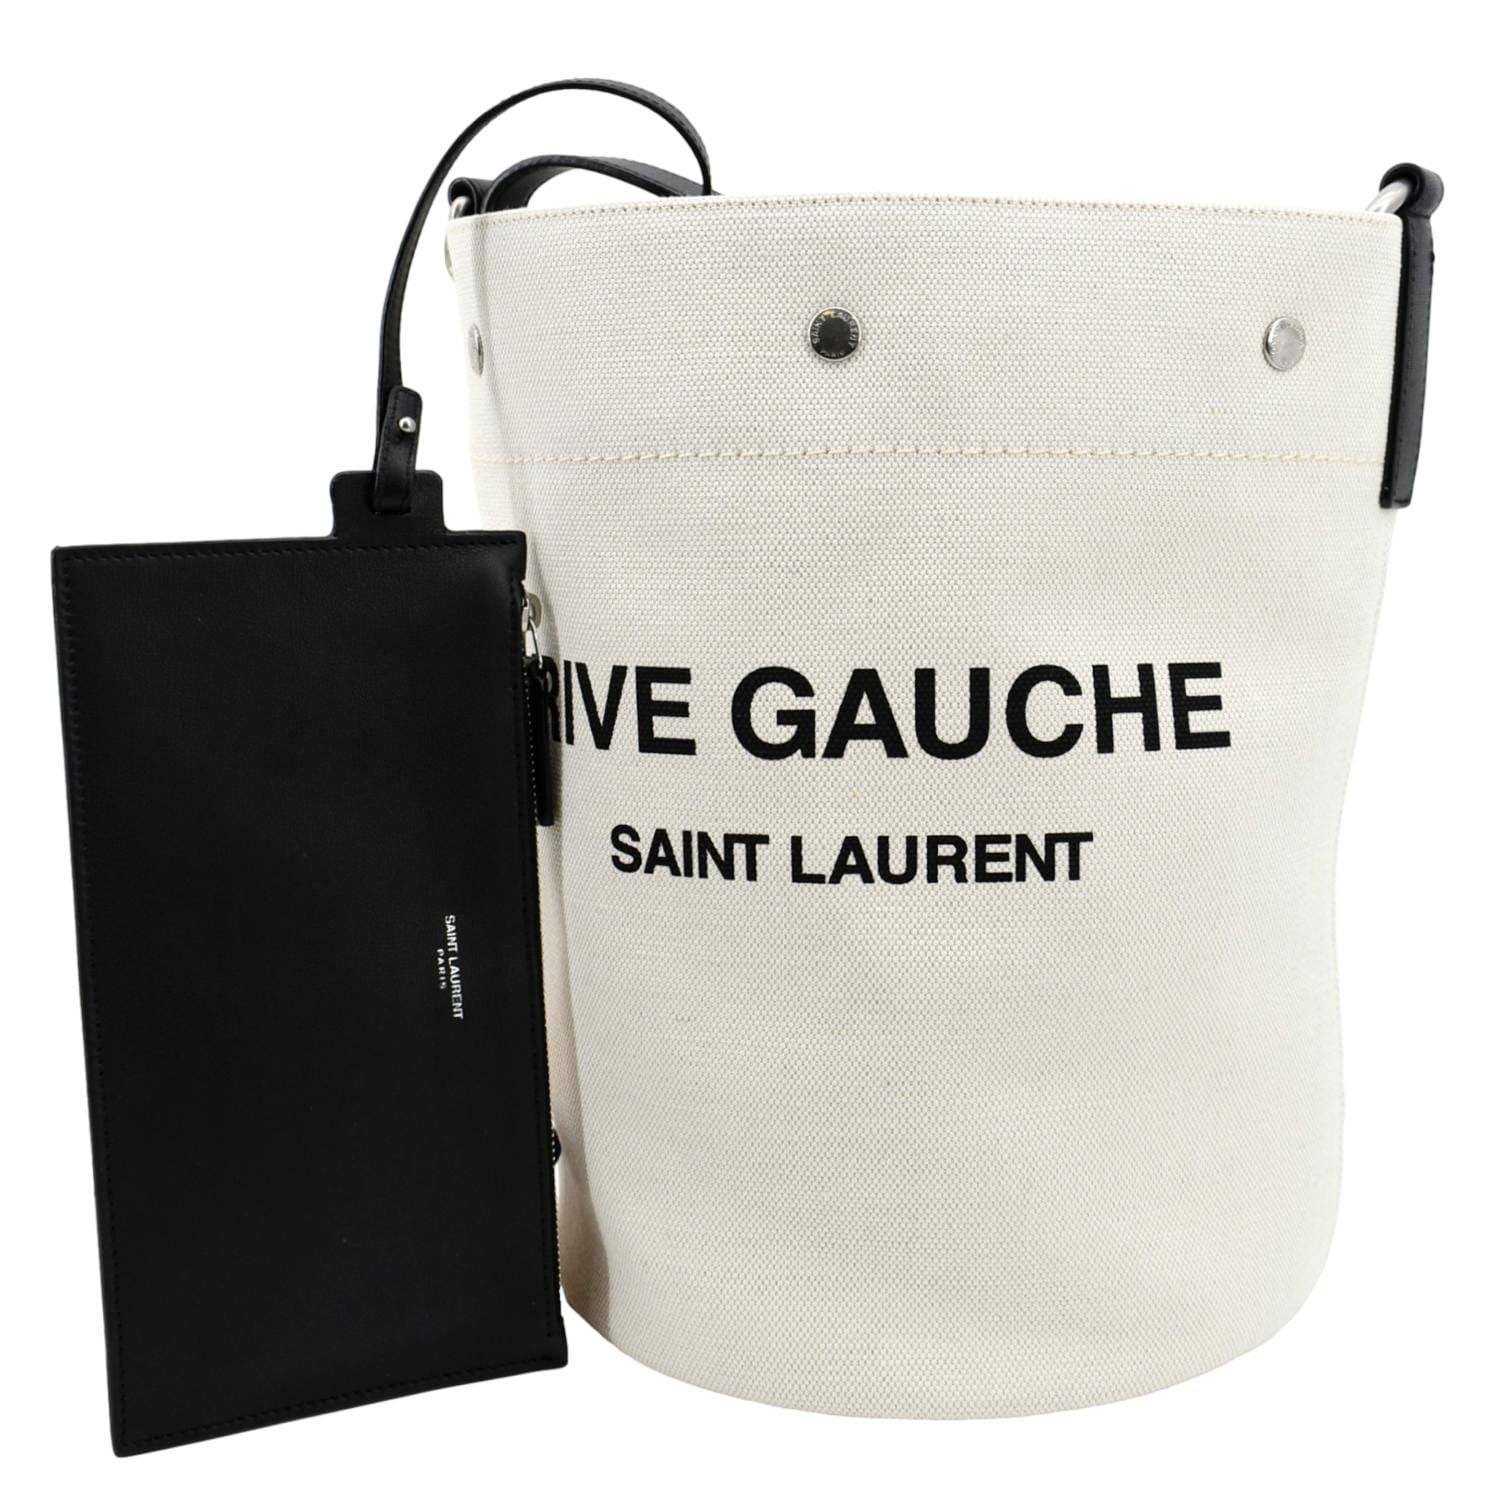 SAINT LAURENT, 'RIVE GAUCHE' CANVAS WEEKENDER TOTE BAG, Men